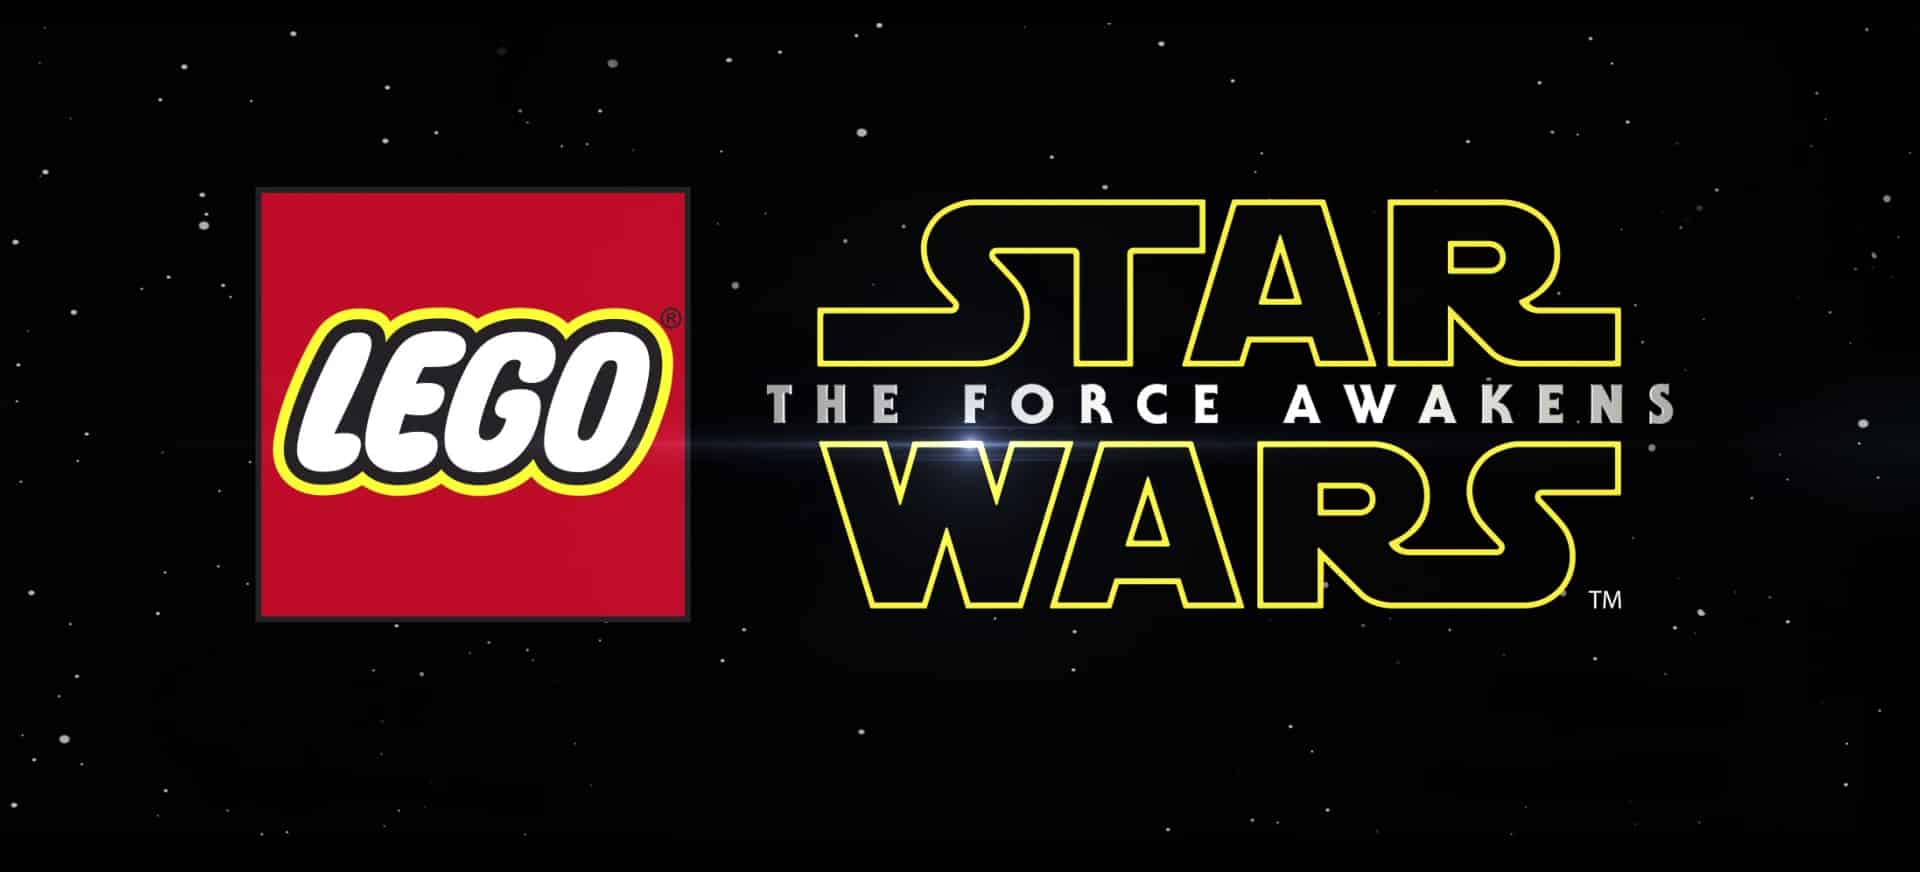 Lego Star Wars: The Force Awakens logo